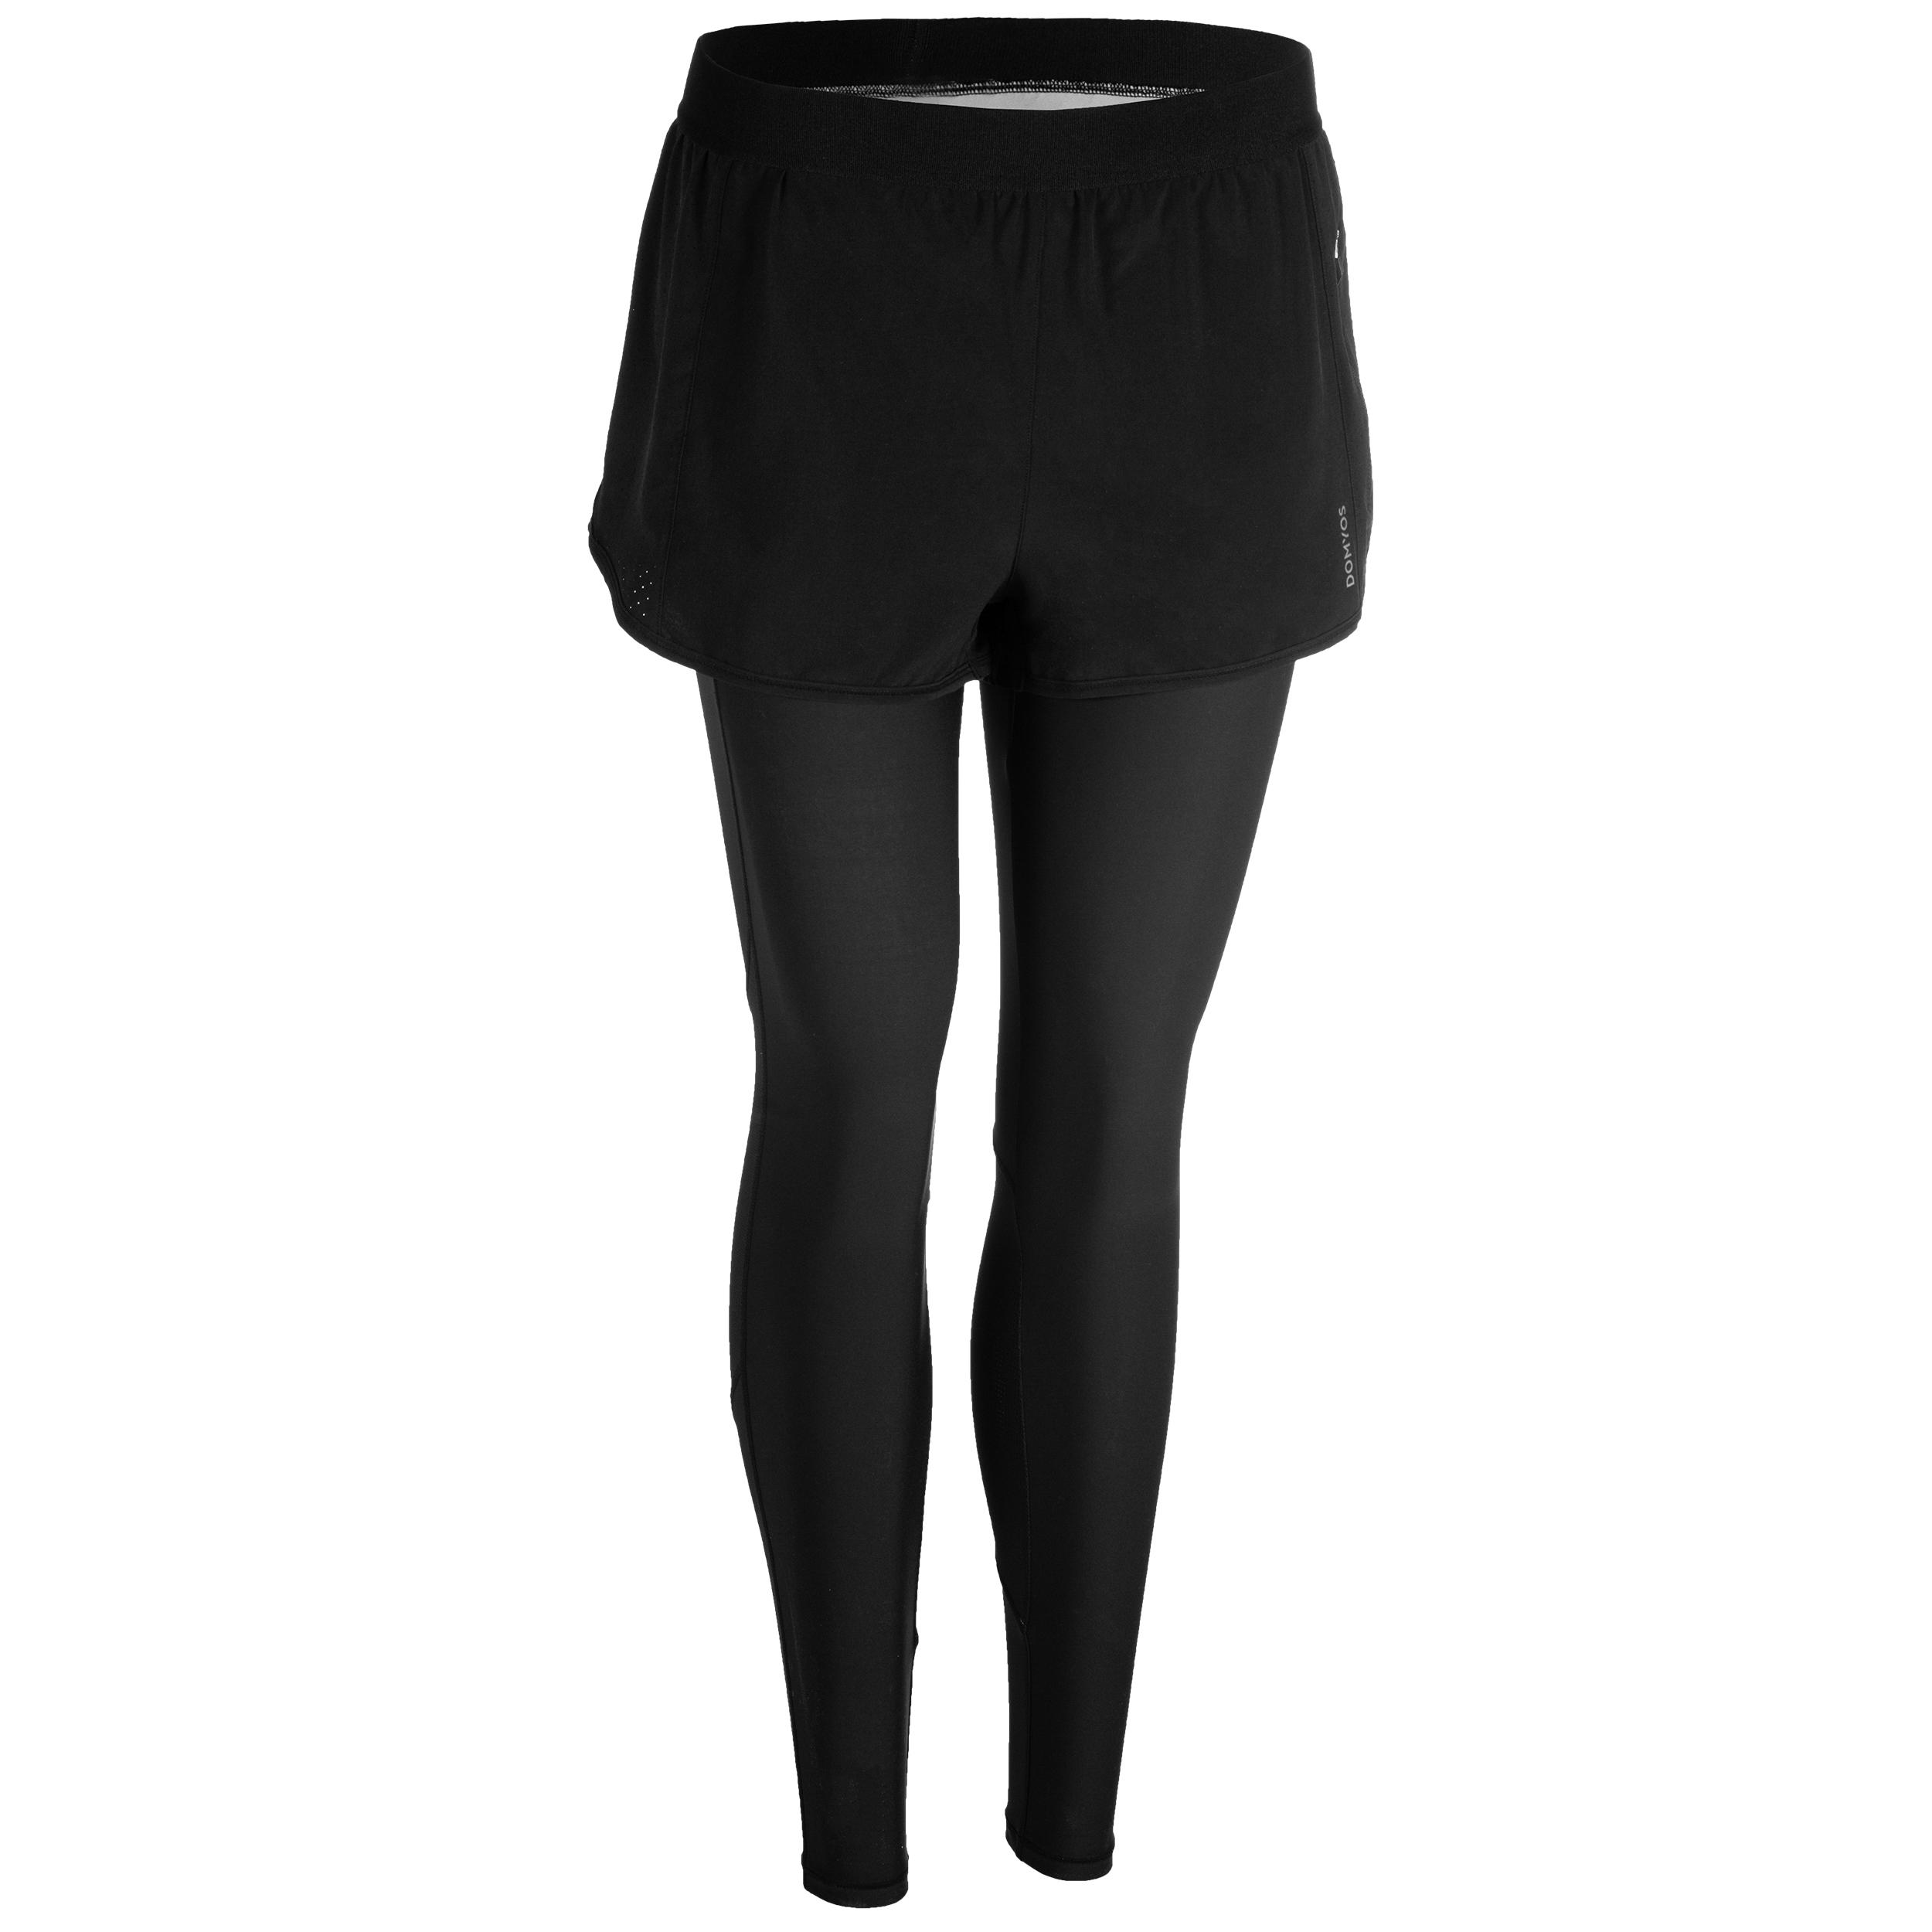 https://contents.mediadecathlon.com/p1674070/k$6584104691305918178876131faf632e/fitness-2-in-1-leggings-shorts-with-phone-pocket-black-domyos-8547531.jpg